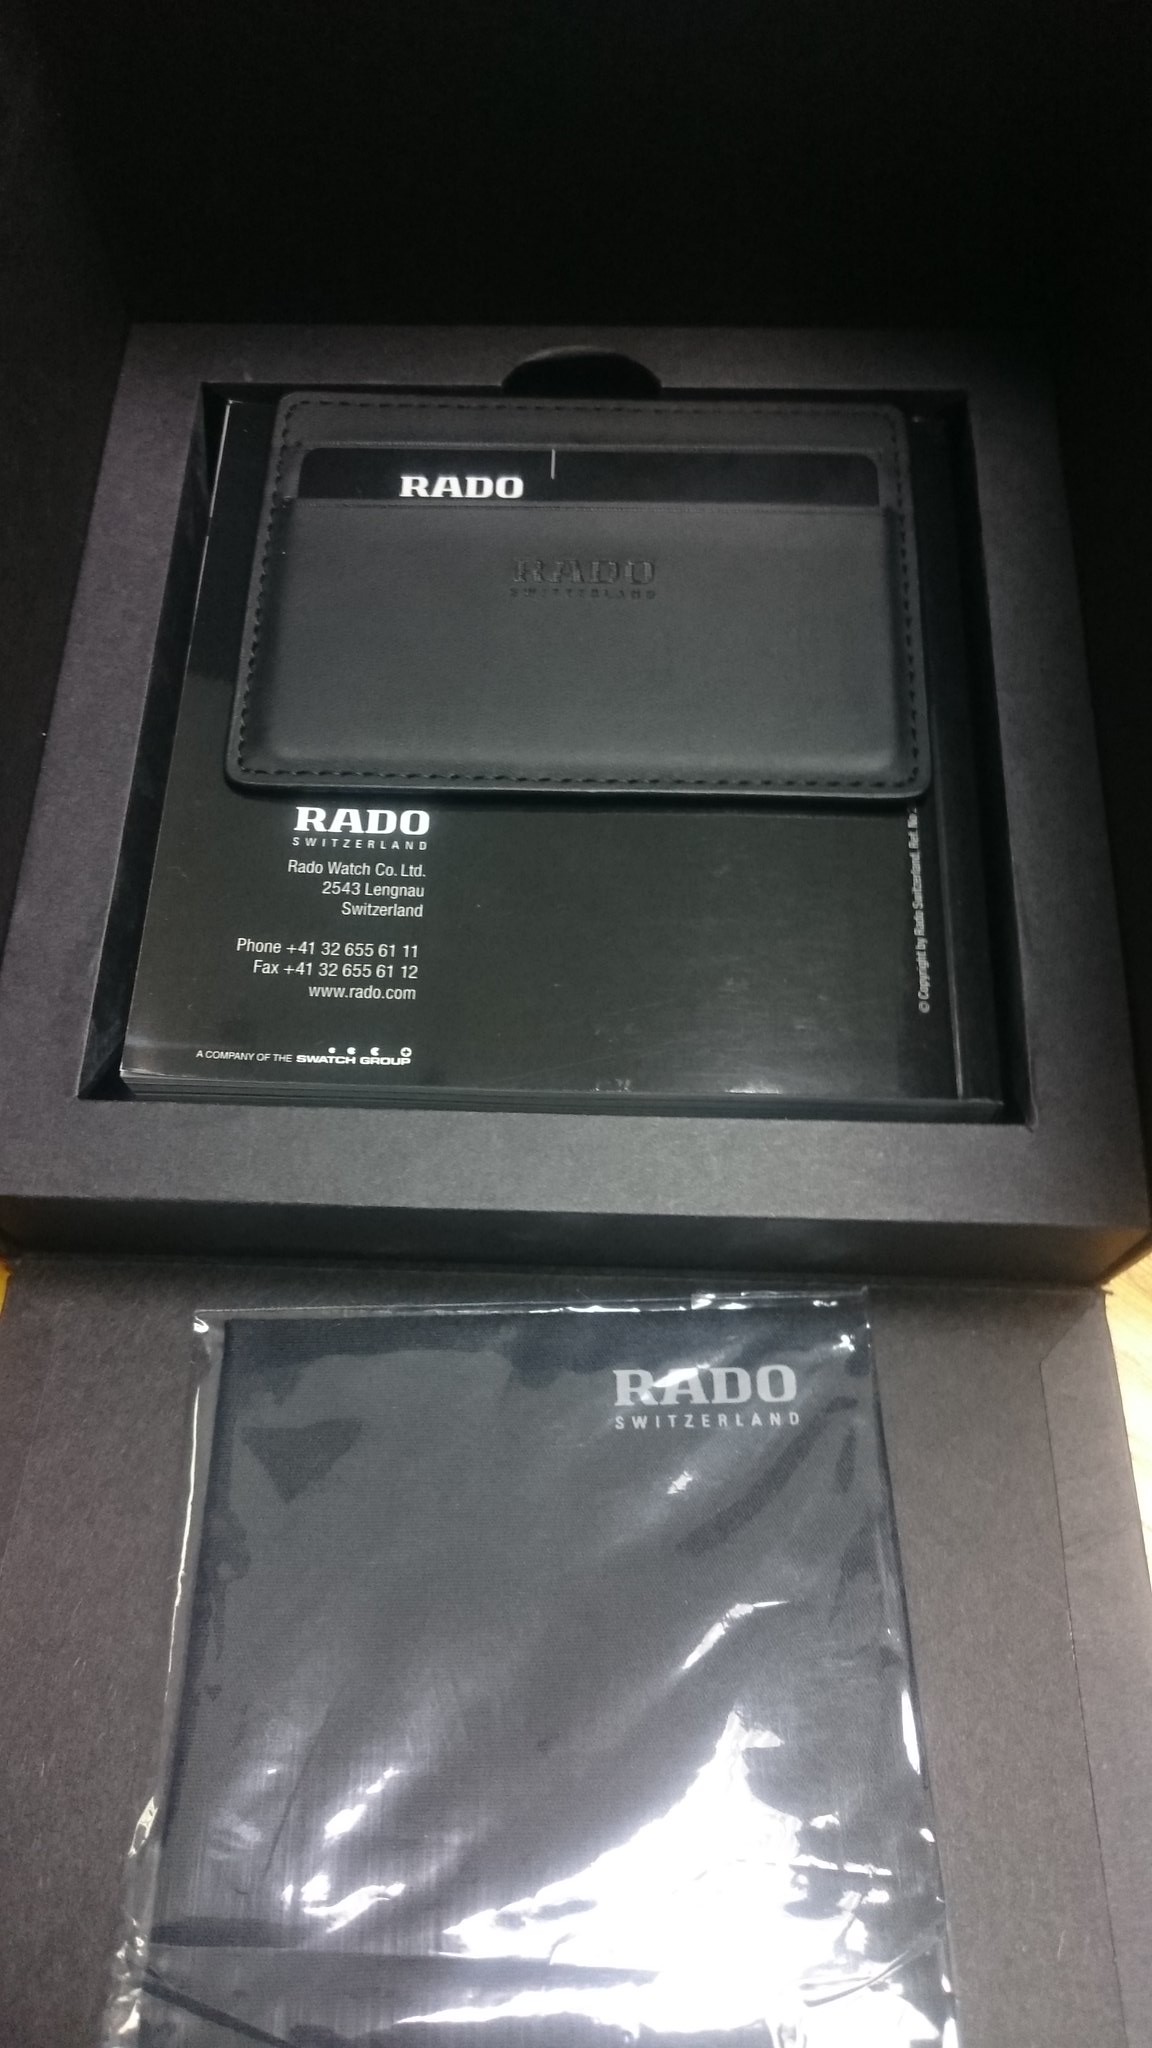 Bán đồng hồ Rado Diastar Original Watch cho nữ - 2